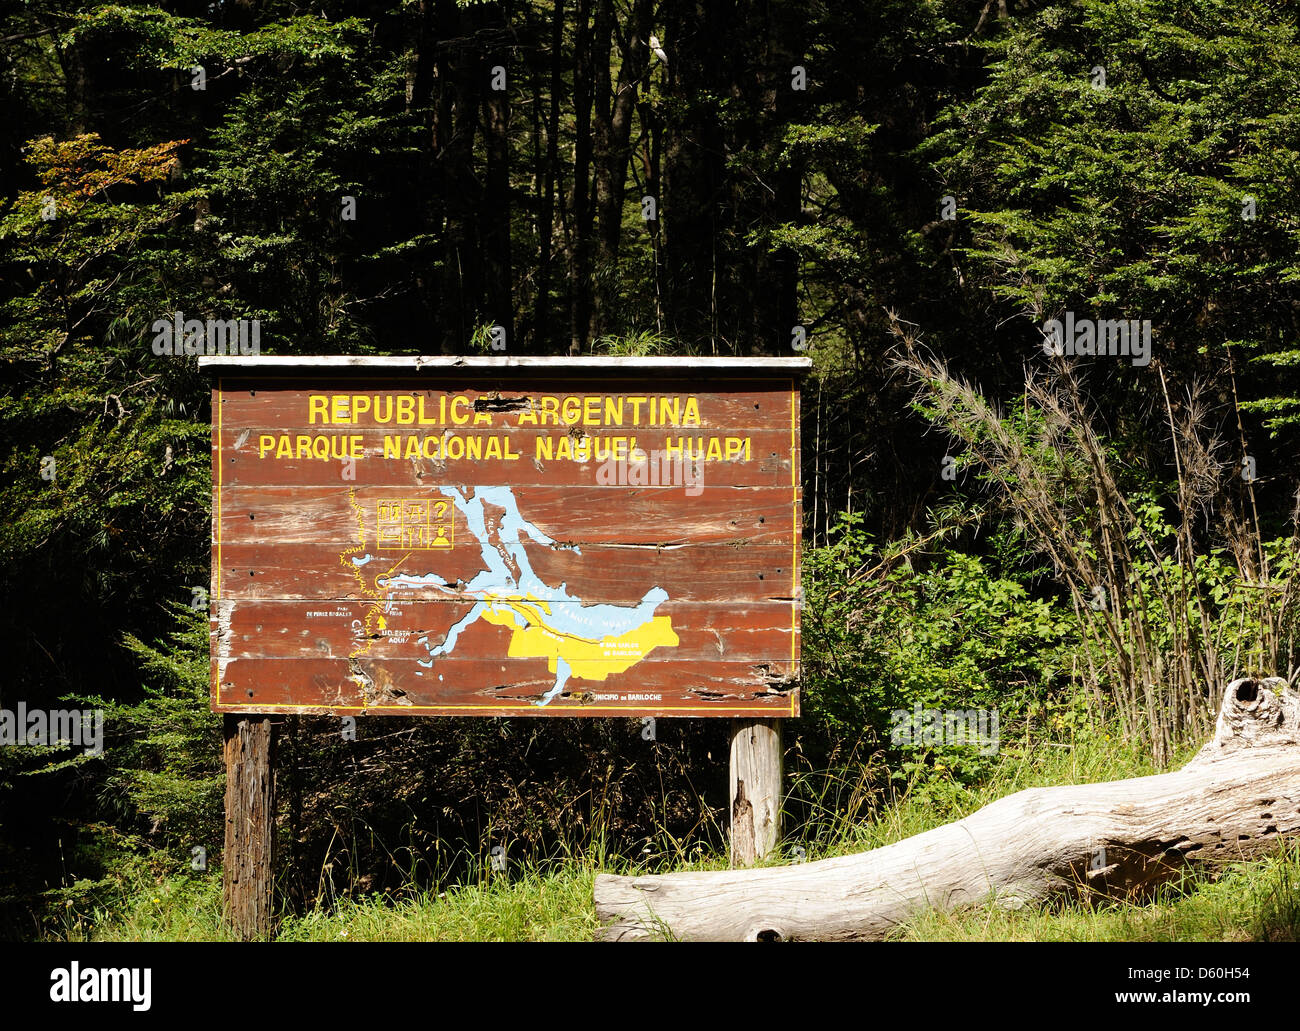 Cartello che diceva "Republica Argentina Parque Nacional Nahuel Huapi' con una mappa del parco. Foto Stock